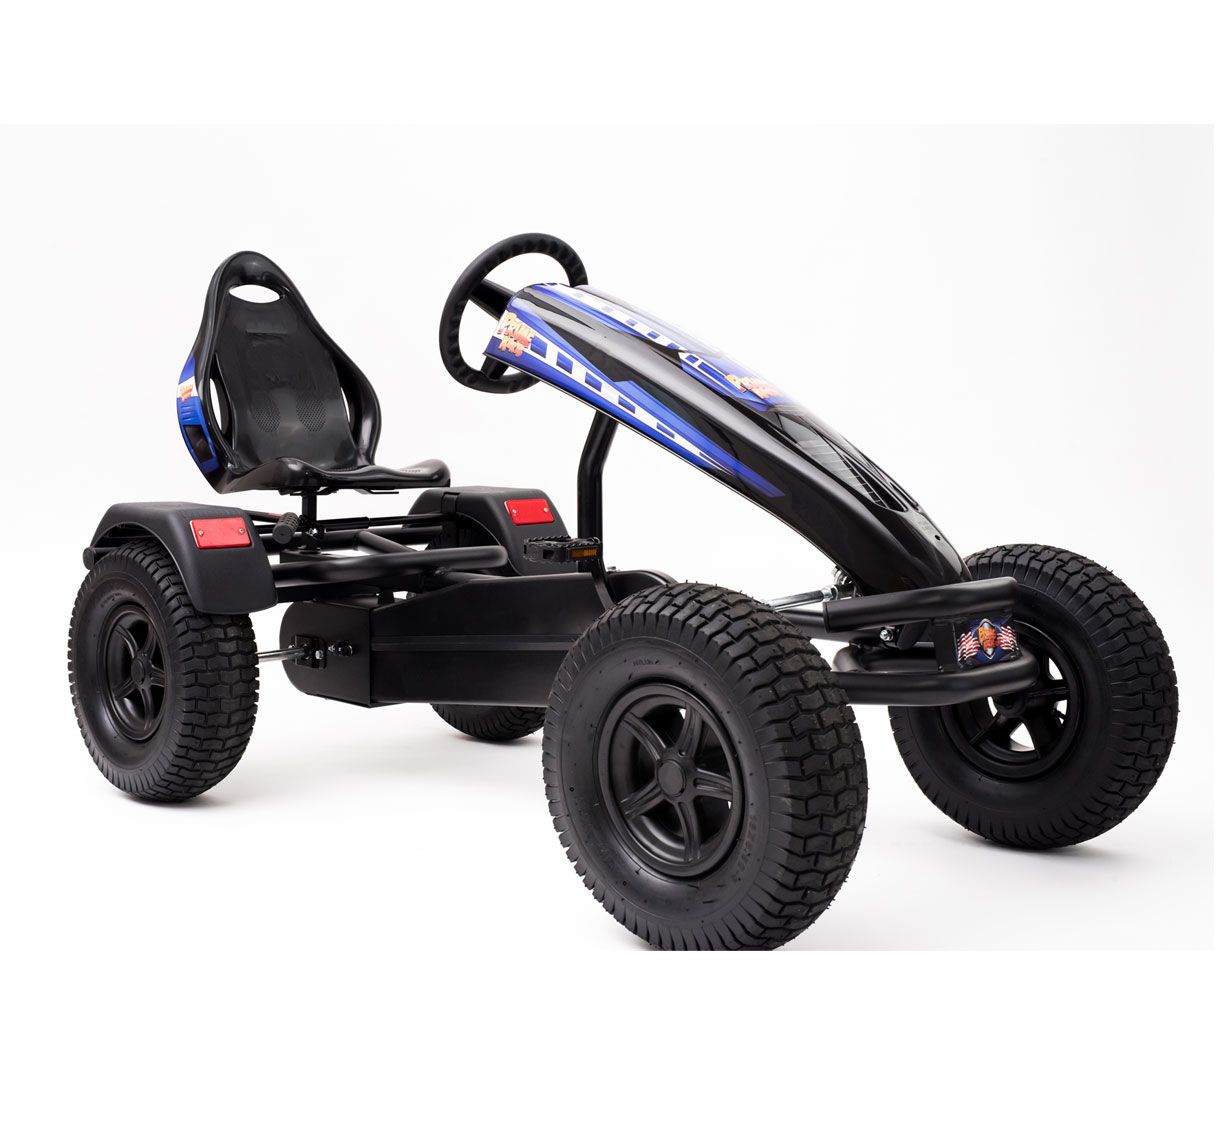  Prime Karts 4-Wheel Trailblazer Pedal Kart : Automotive